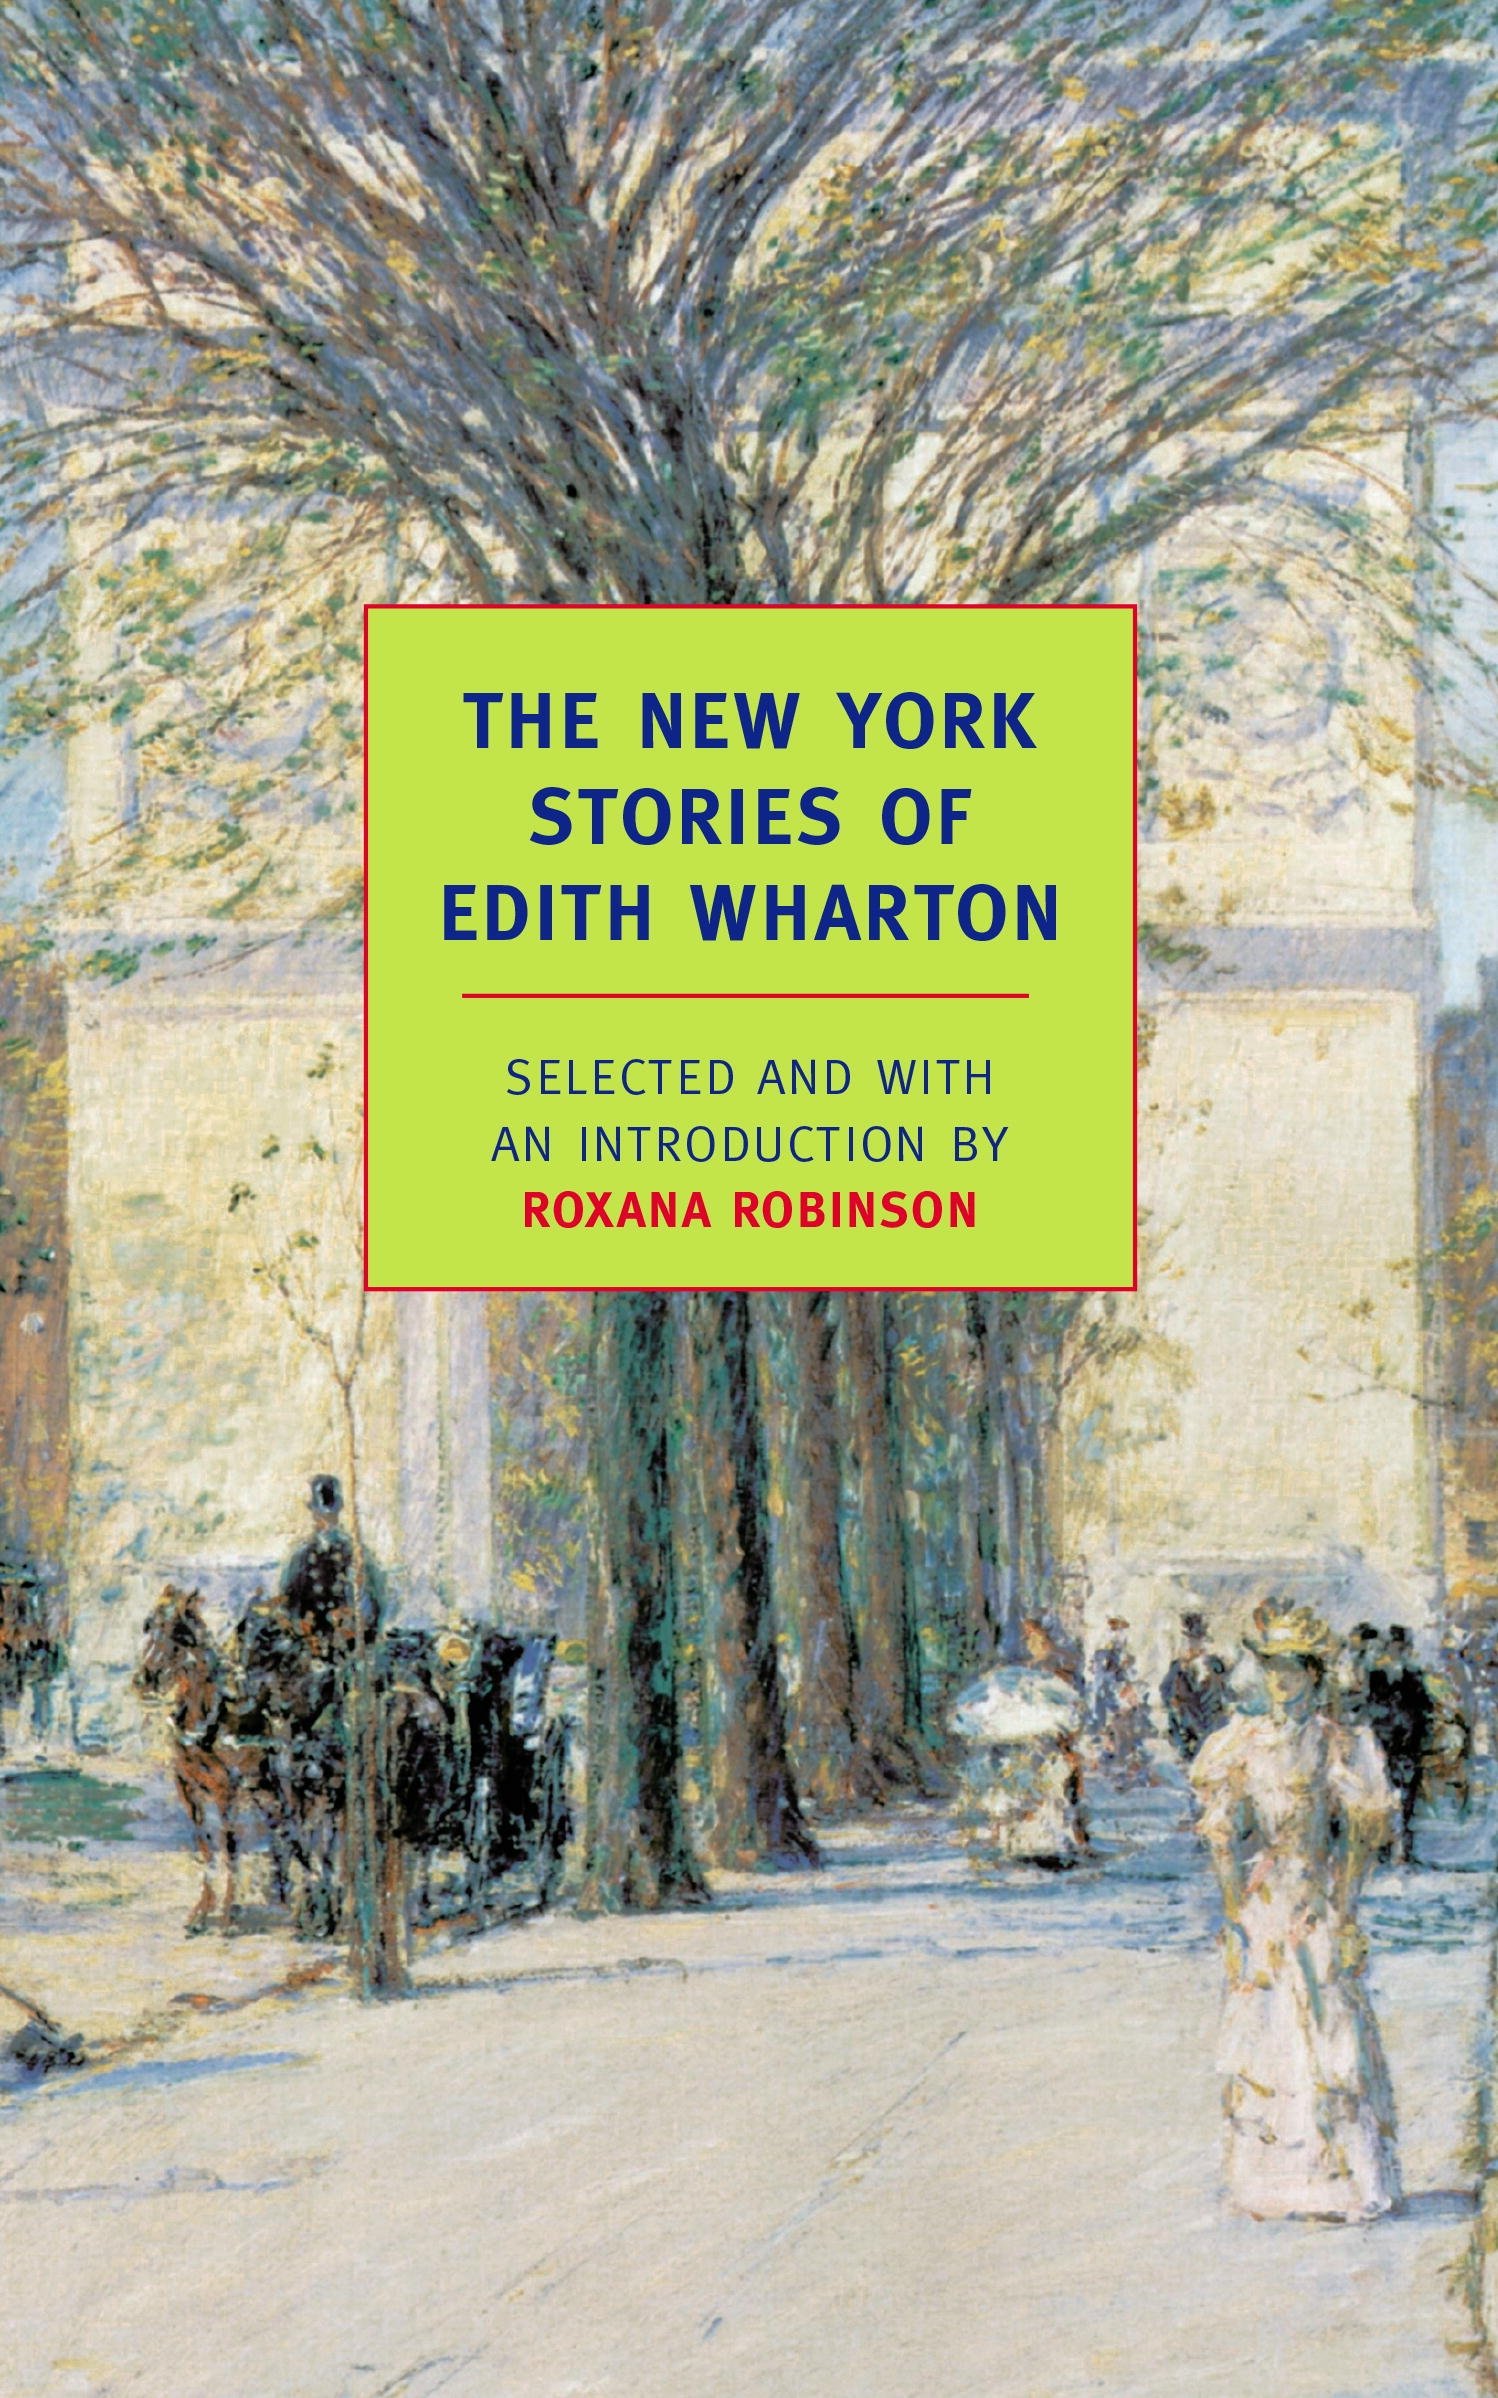 The New York stories of Edith Wharton